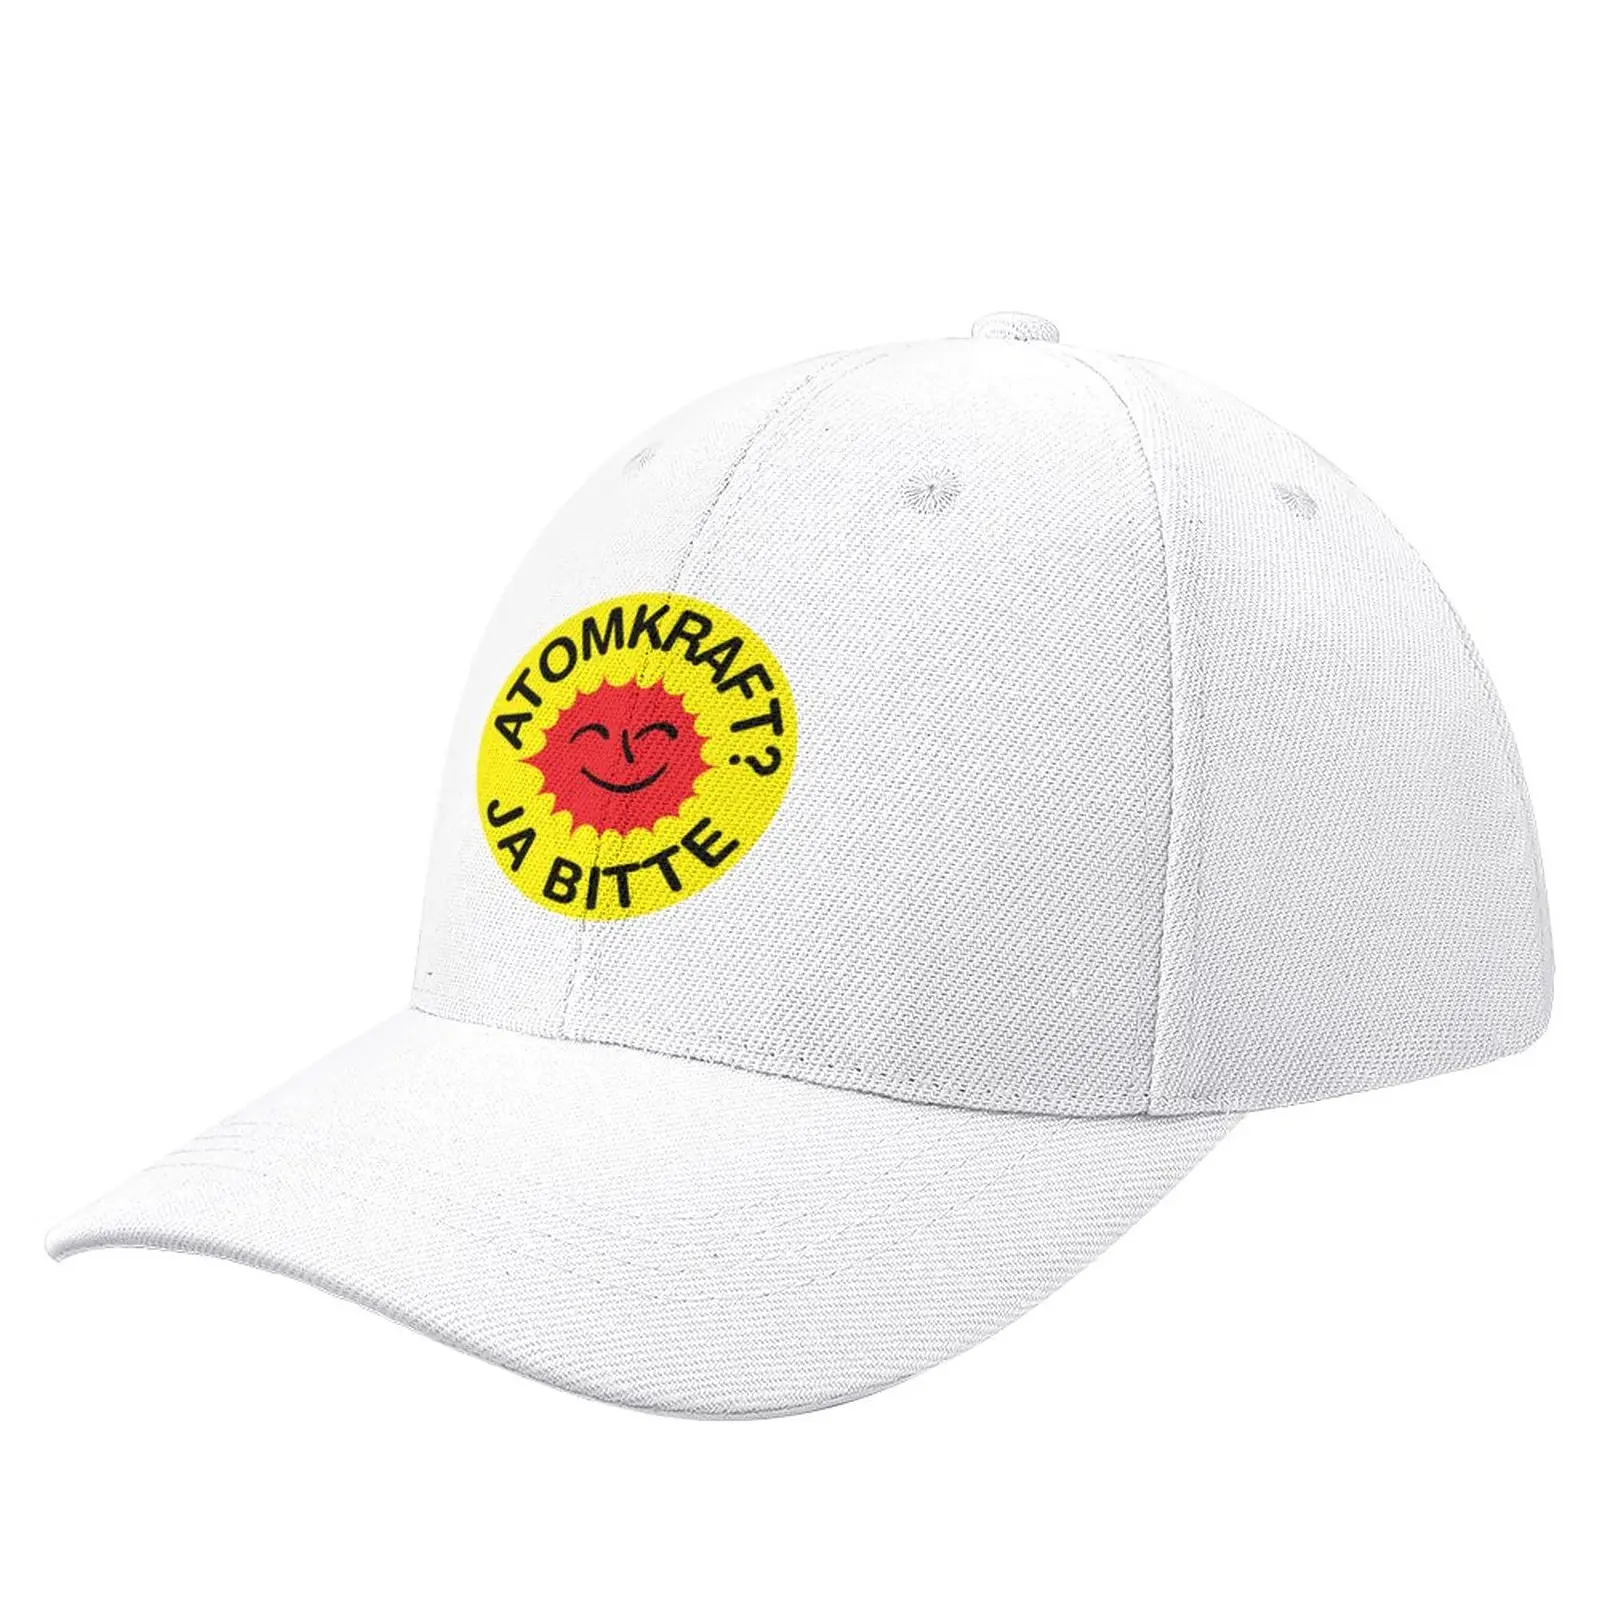 

Atomkraft Ja bitte! Baseball Cap party hats cute derby hat Military Tactical Cap Women'S Golf Clothing Men'S